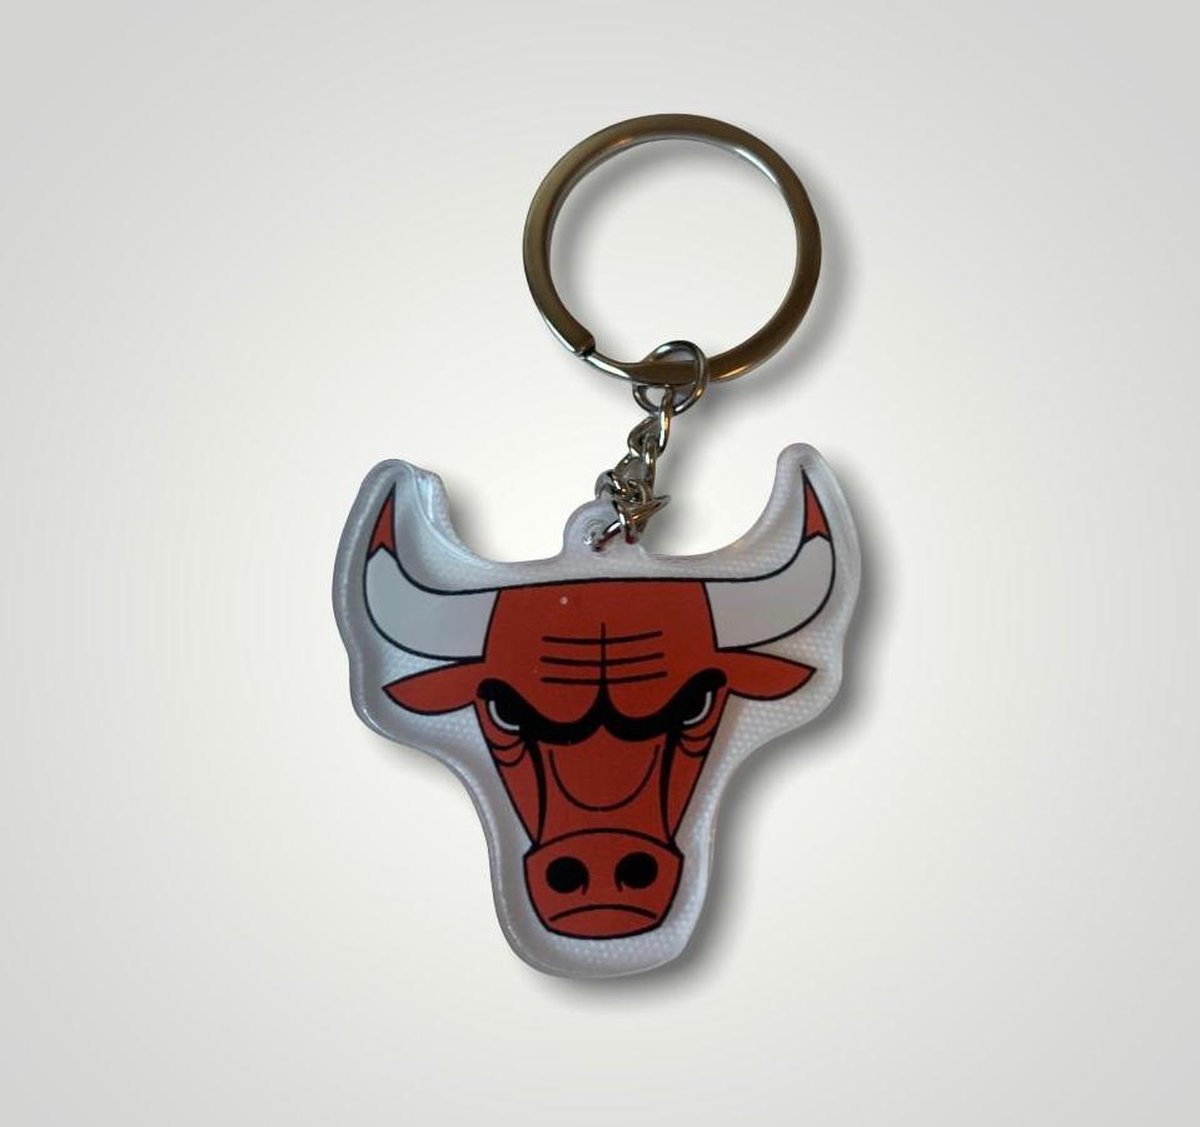 Keychain - Chicago Bulls - Basketball - Michael Jordan - 23 - NBA - keychains - key ring